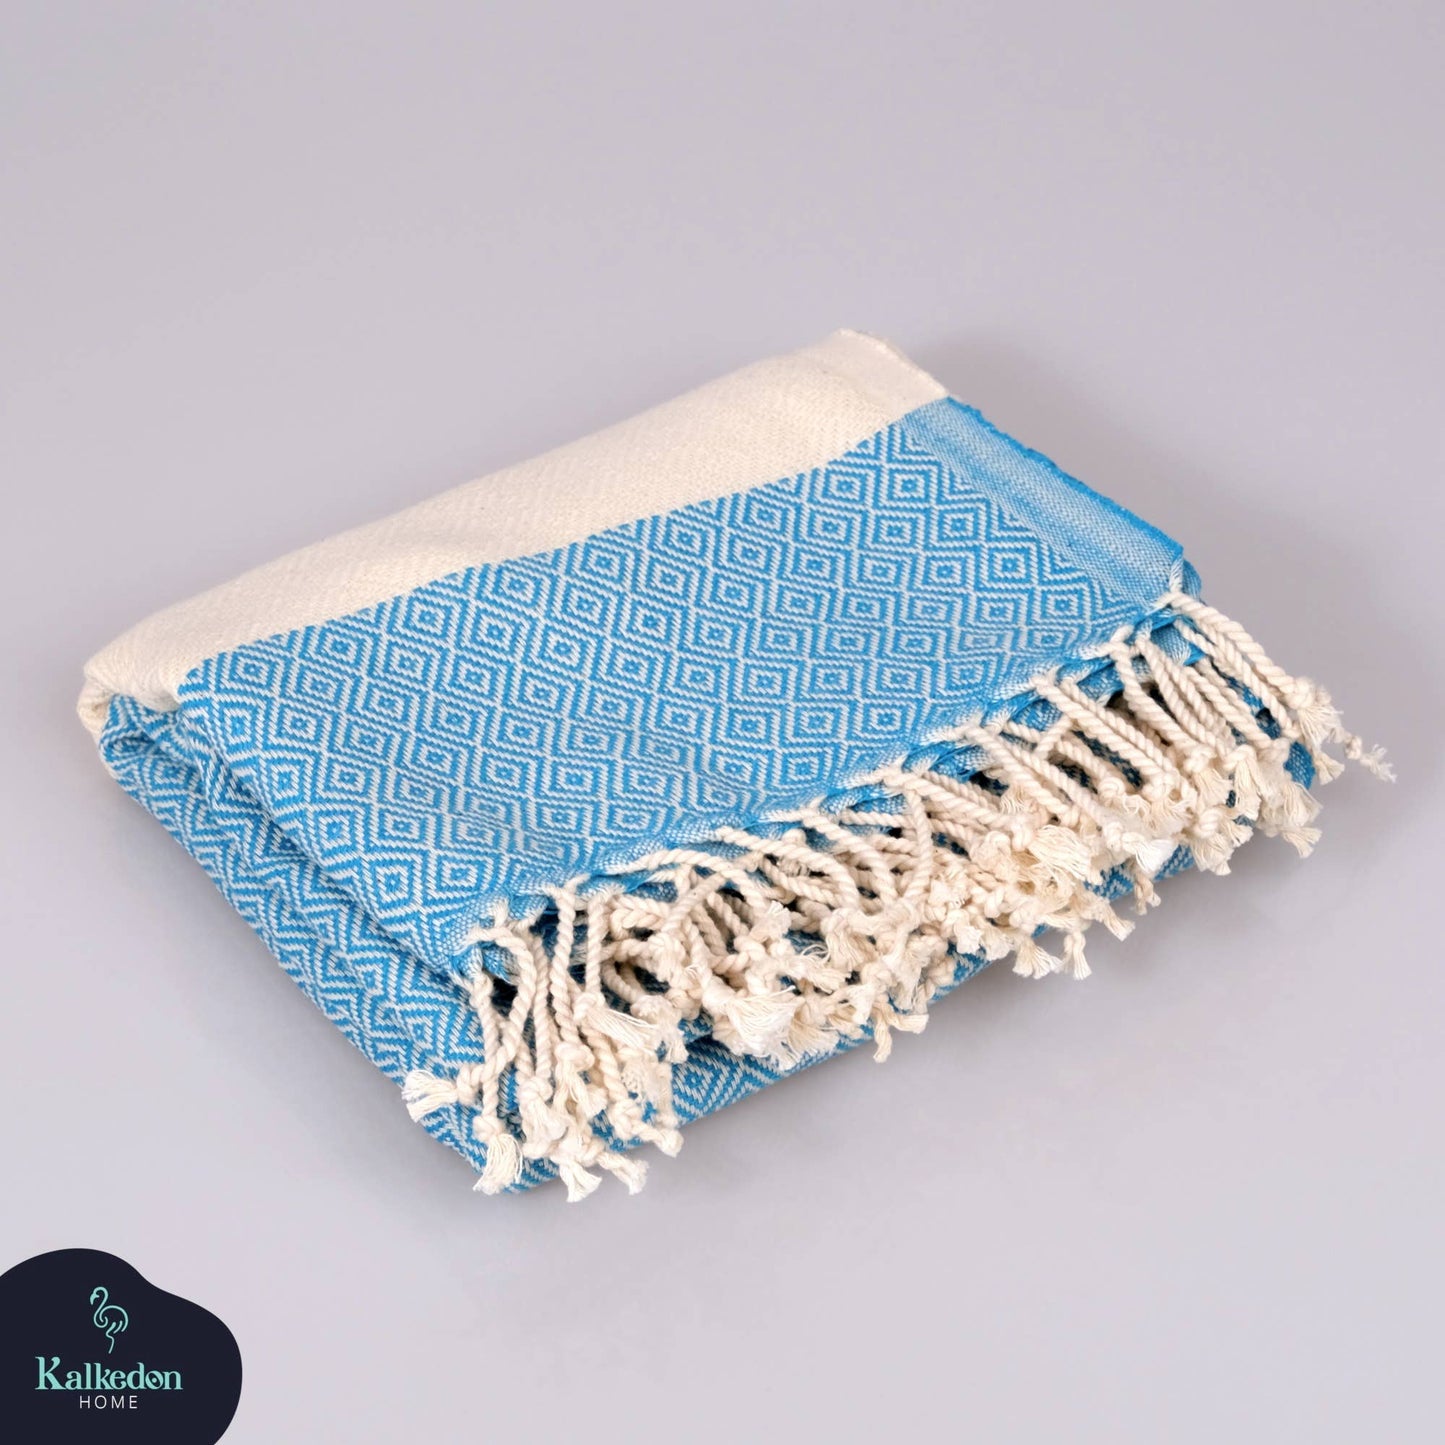 Turkish Towel | Peshtemal | Sand Resistant Beach Towel….Turquoise